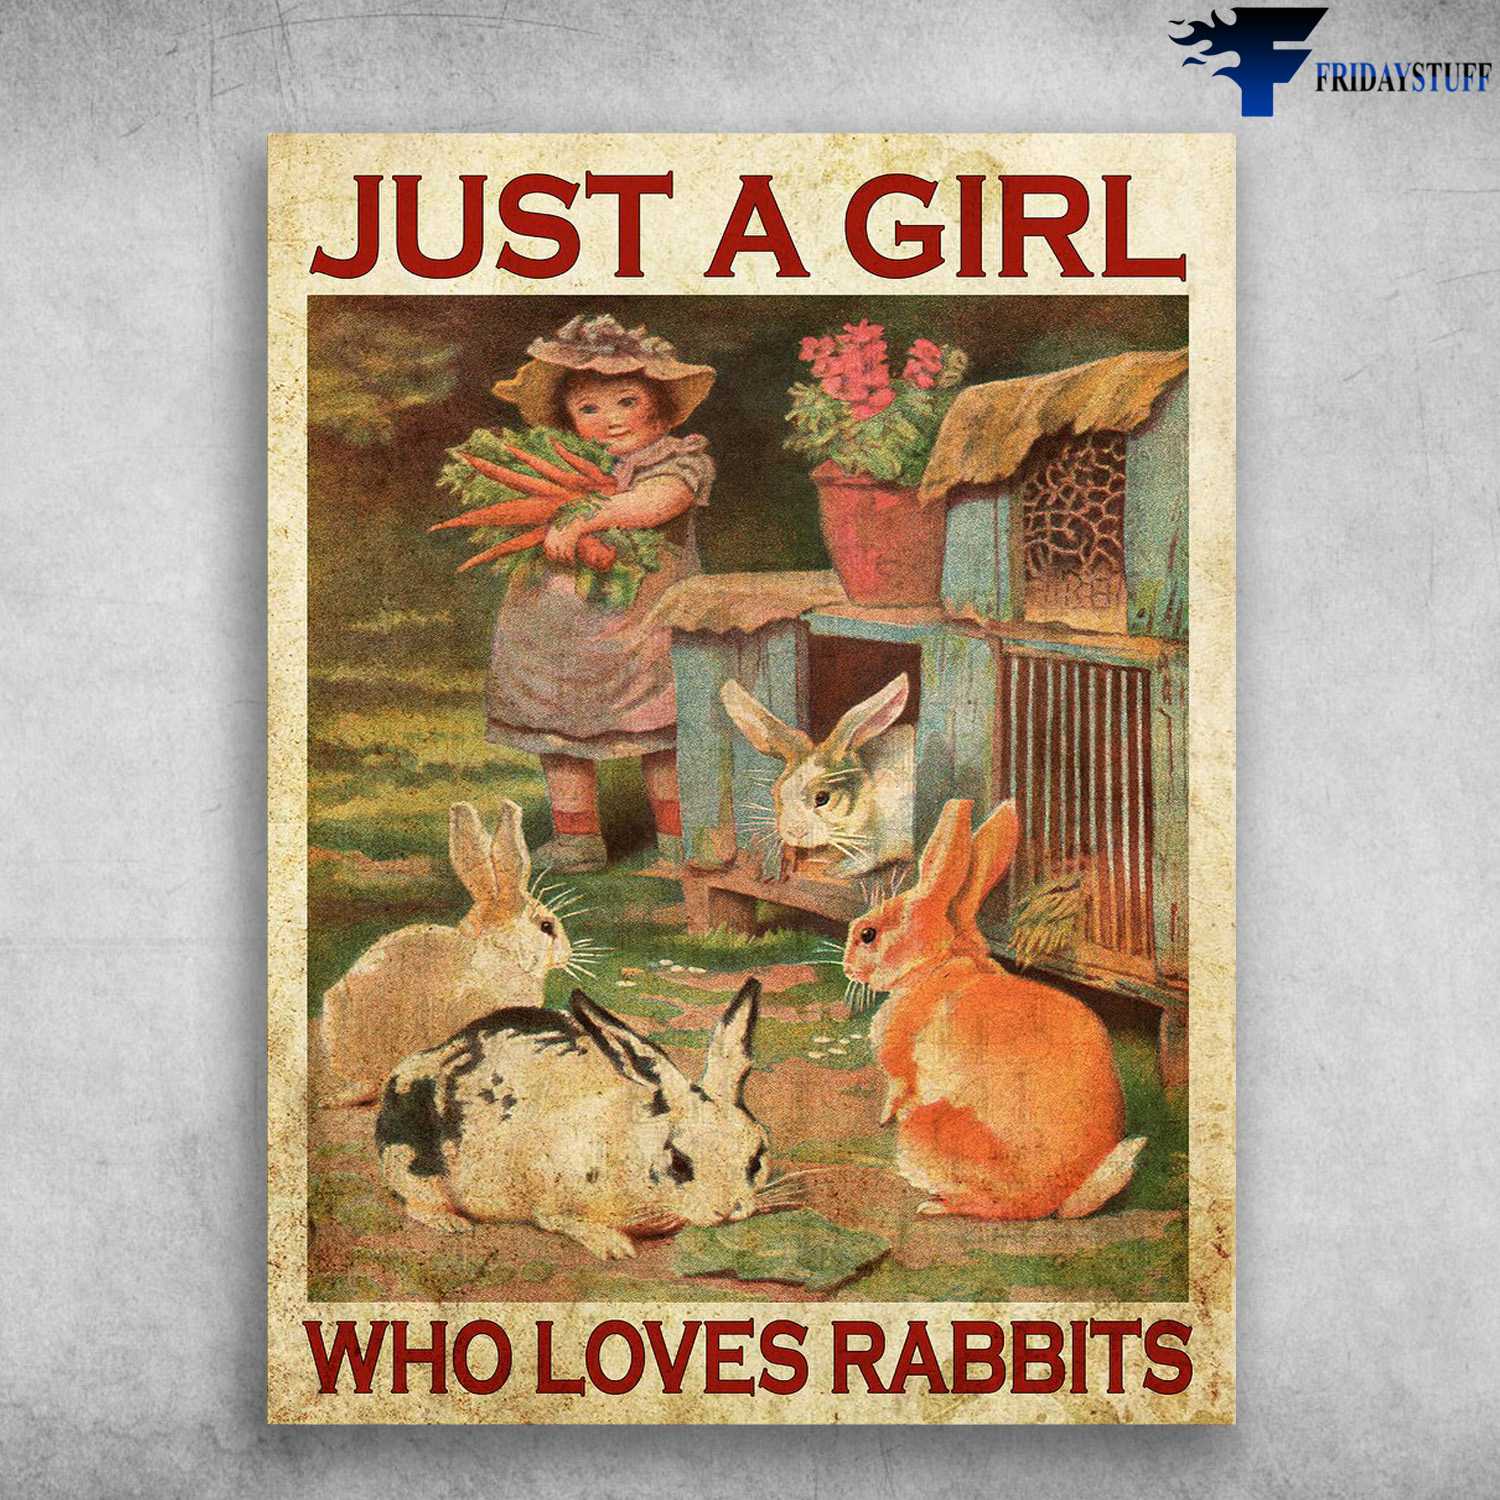 Rabbit Lover, Rabbit Poster - Just A Girl, Who Loves Rabbits